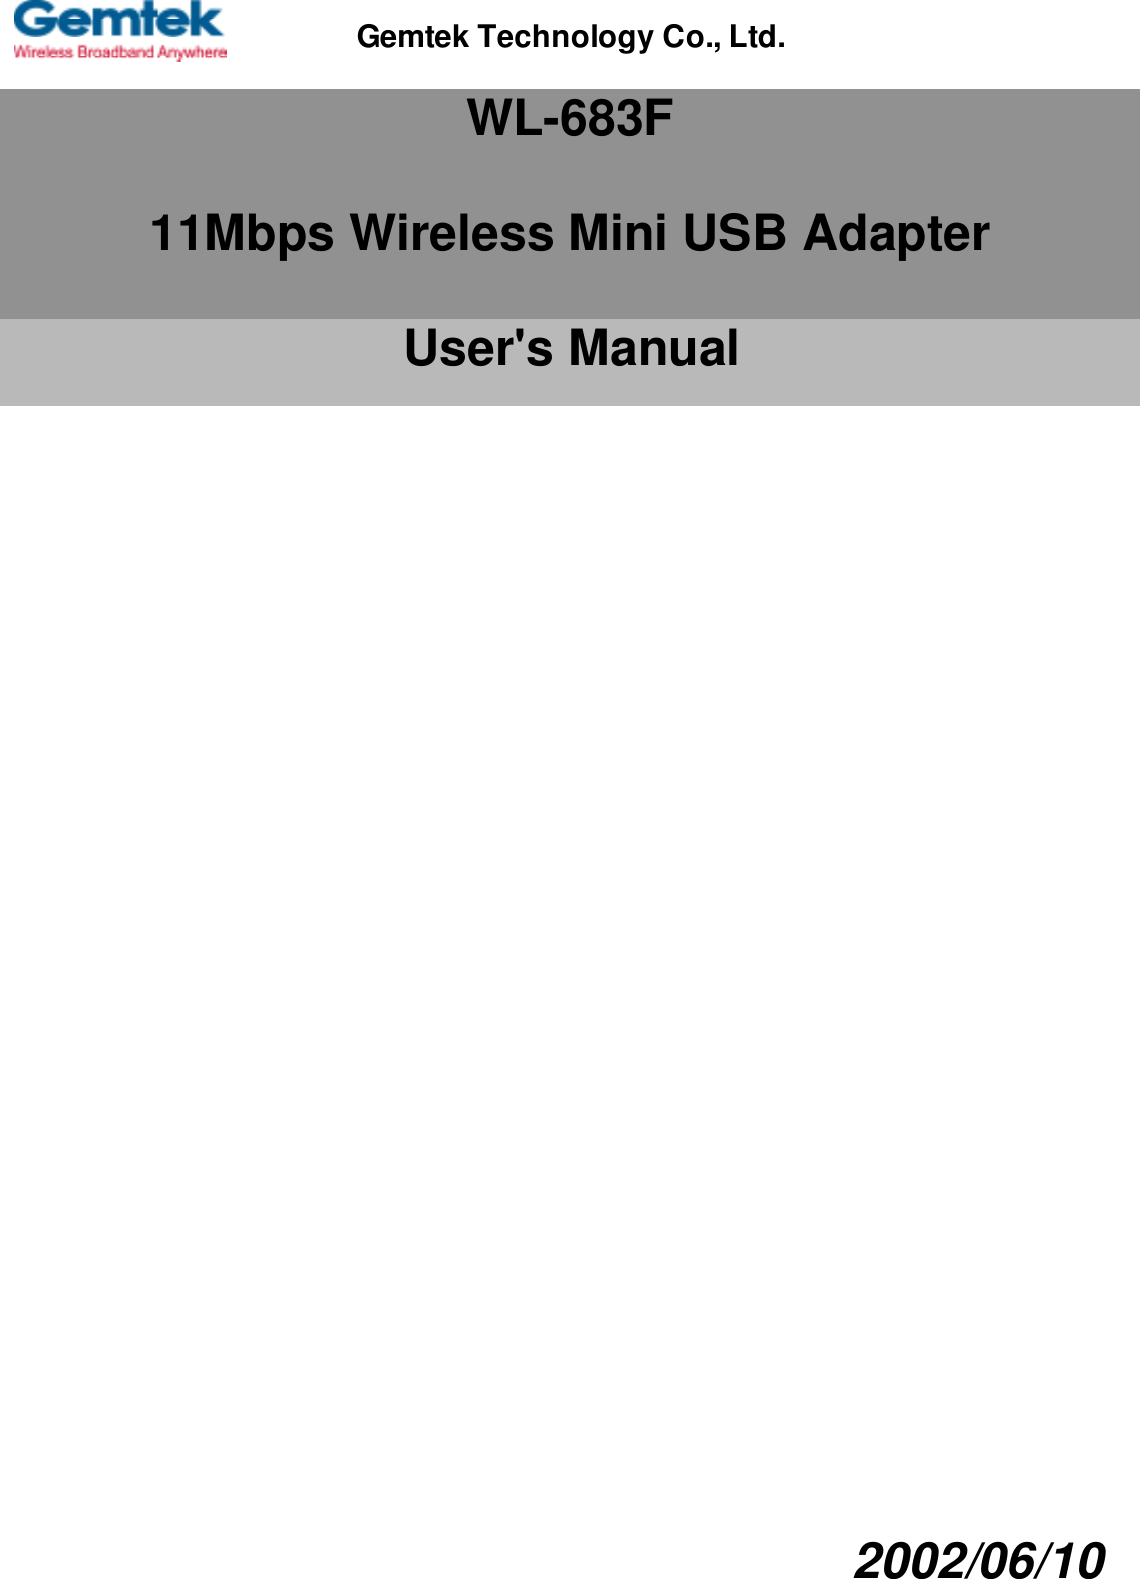 WL-683F11Mbps Wireless Mini USB AdapterUser&apos;s Manual                                                                                        2002/06/10Gemtek Technology Co., Ltd.